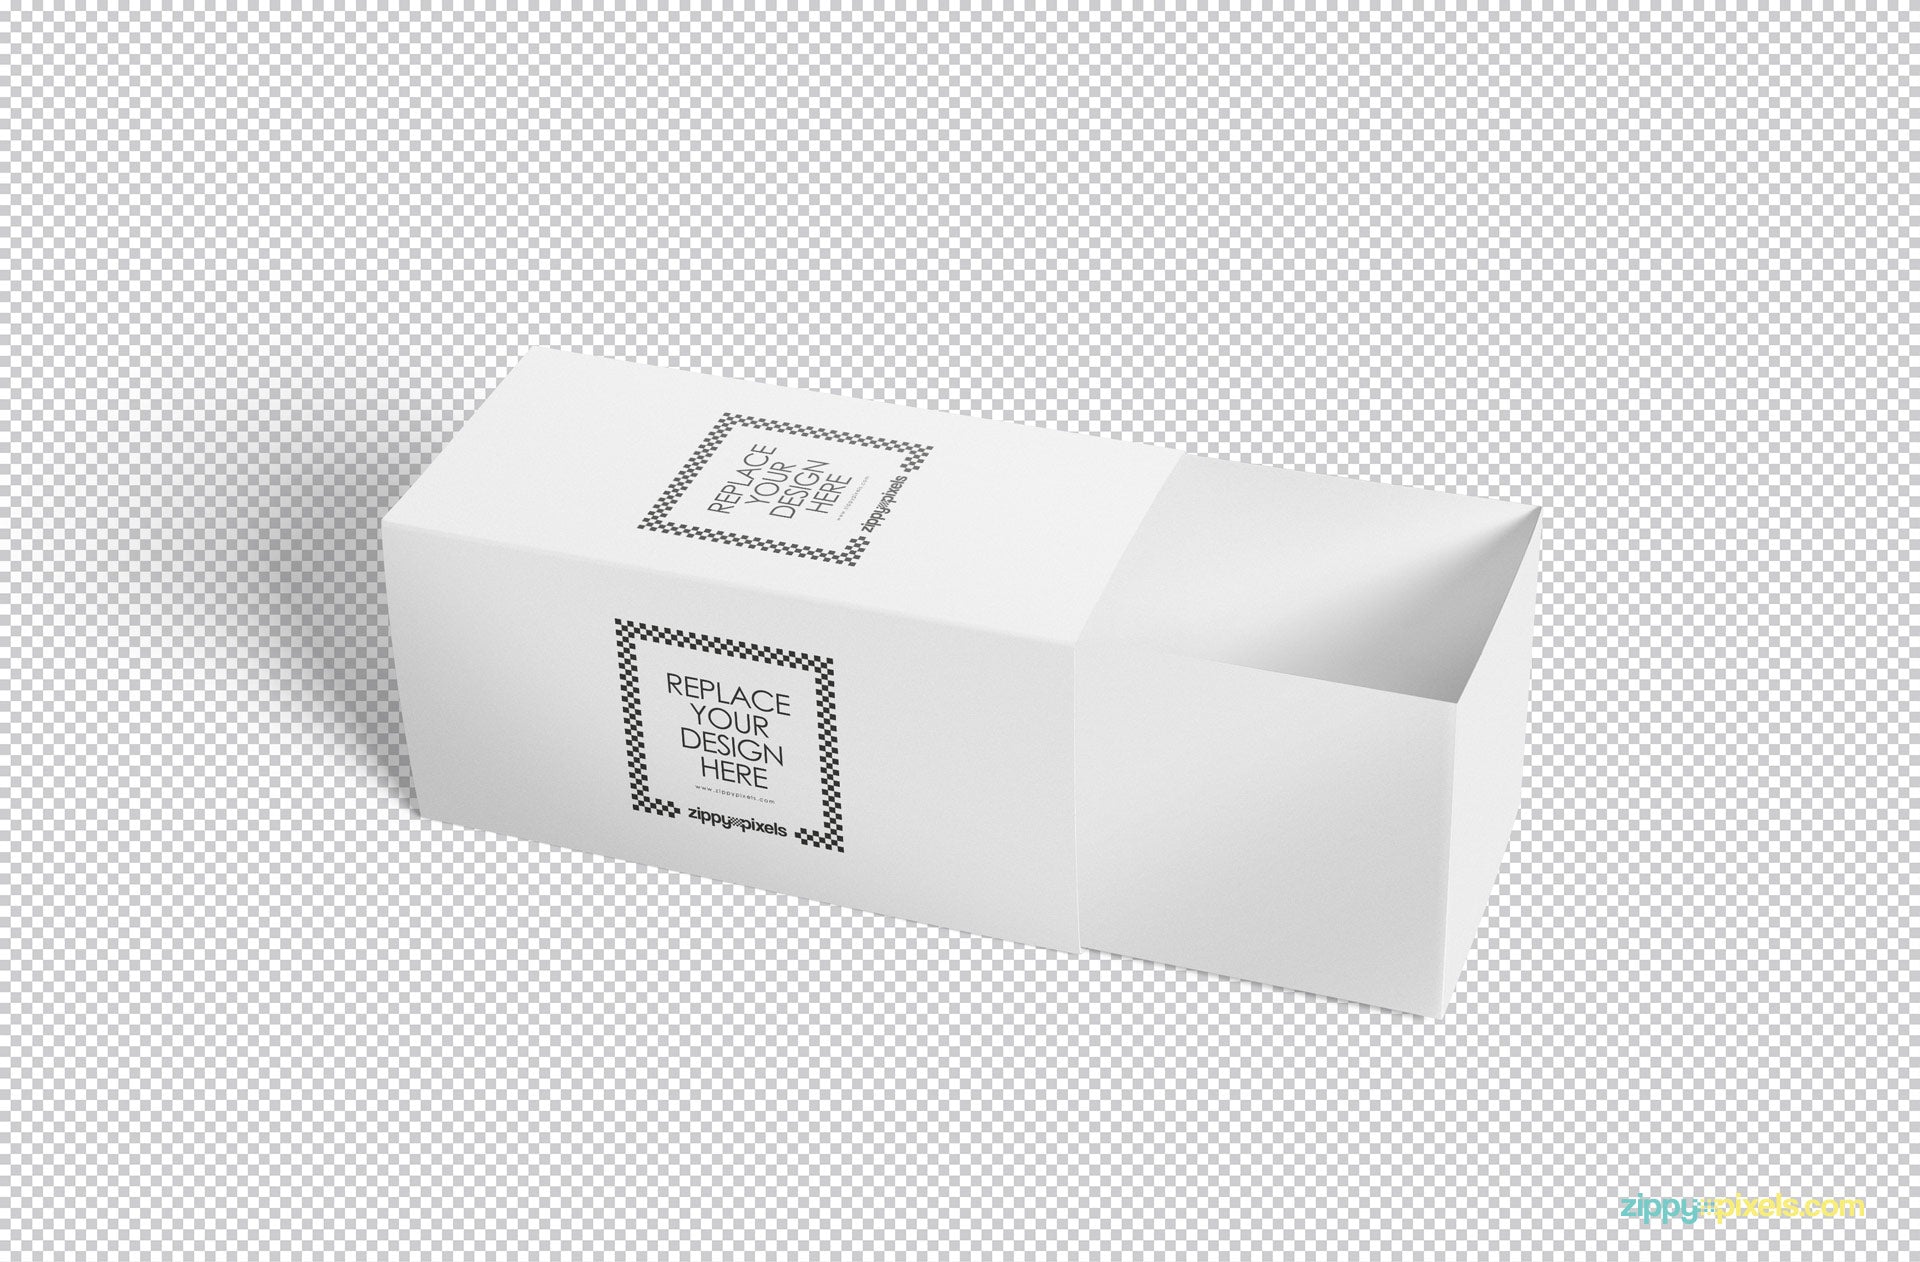 Download 8365+ Sliding Box Packaging Mockup Free PSD File - New Free Mockups PSD Packaging